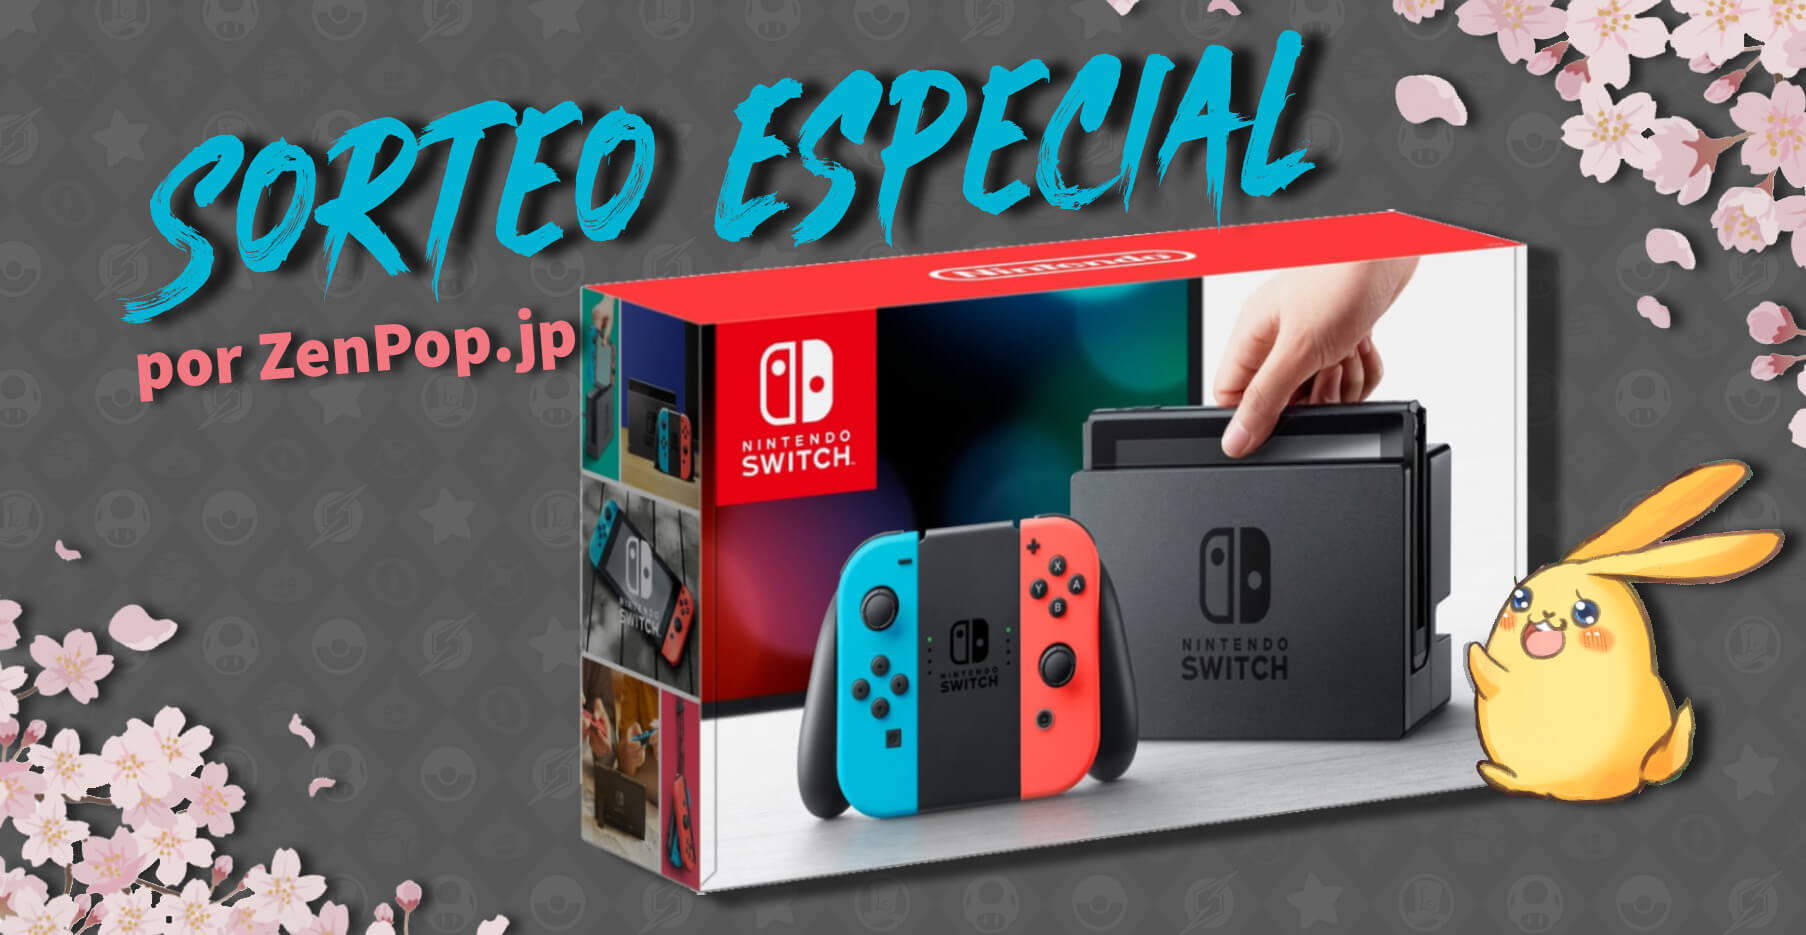 Sorteo Especial por Nintendo Switch